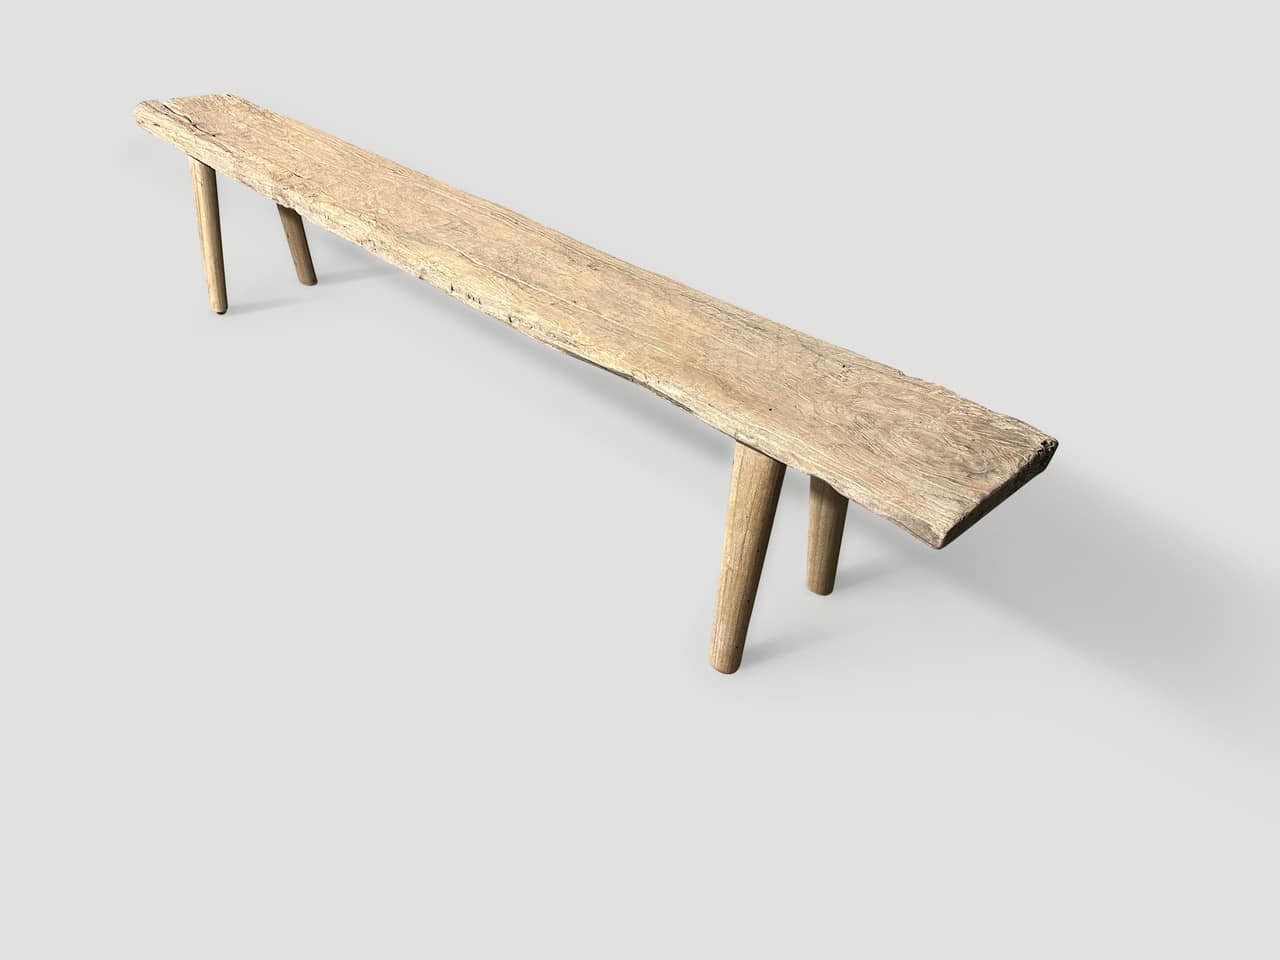 antique teak wood long bench